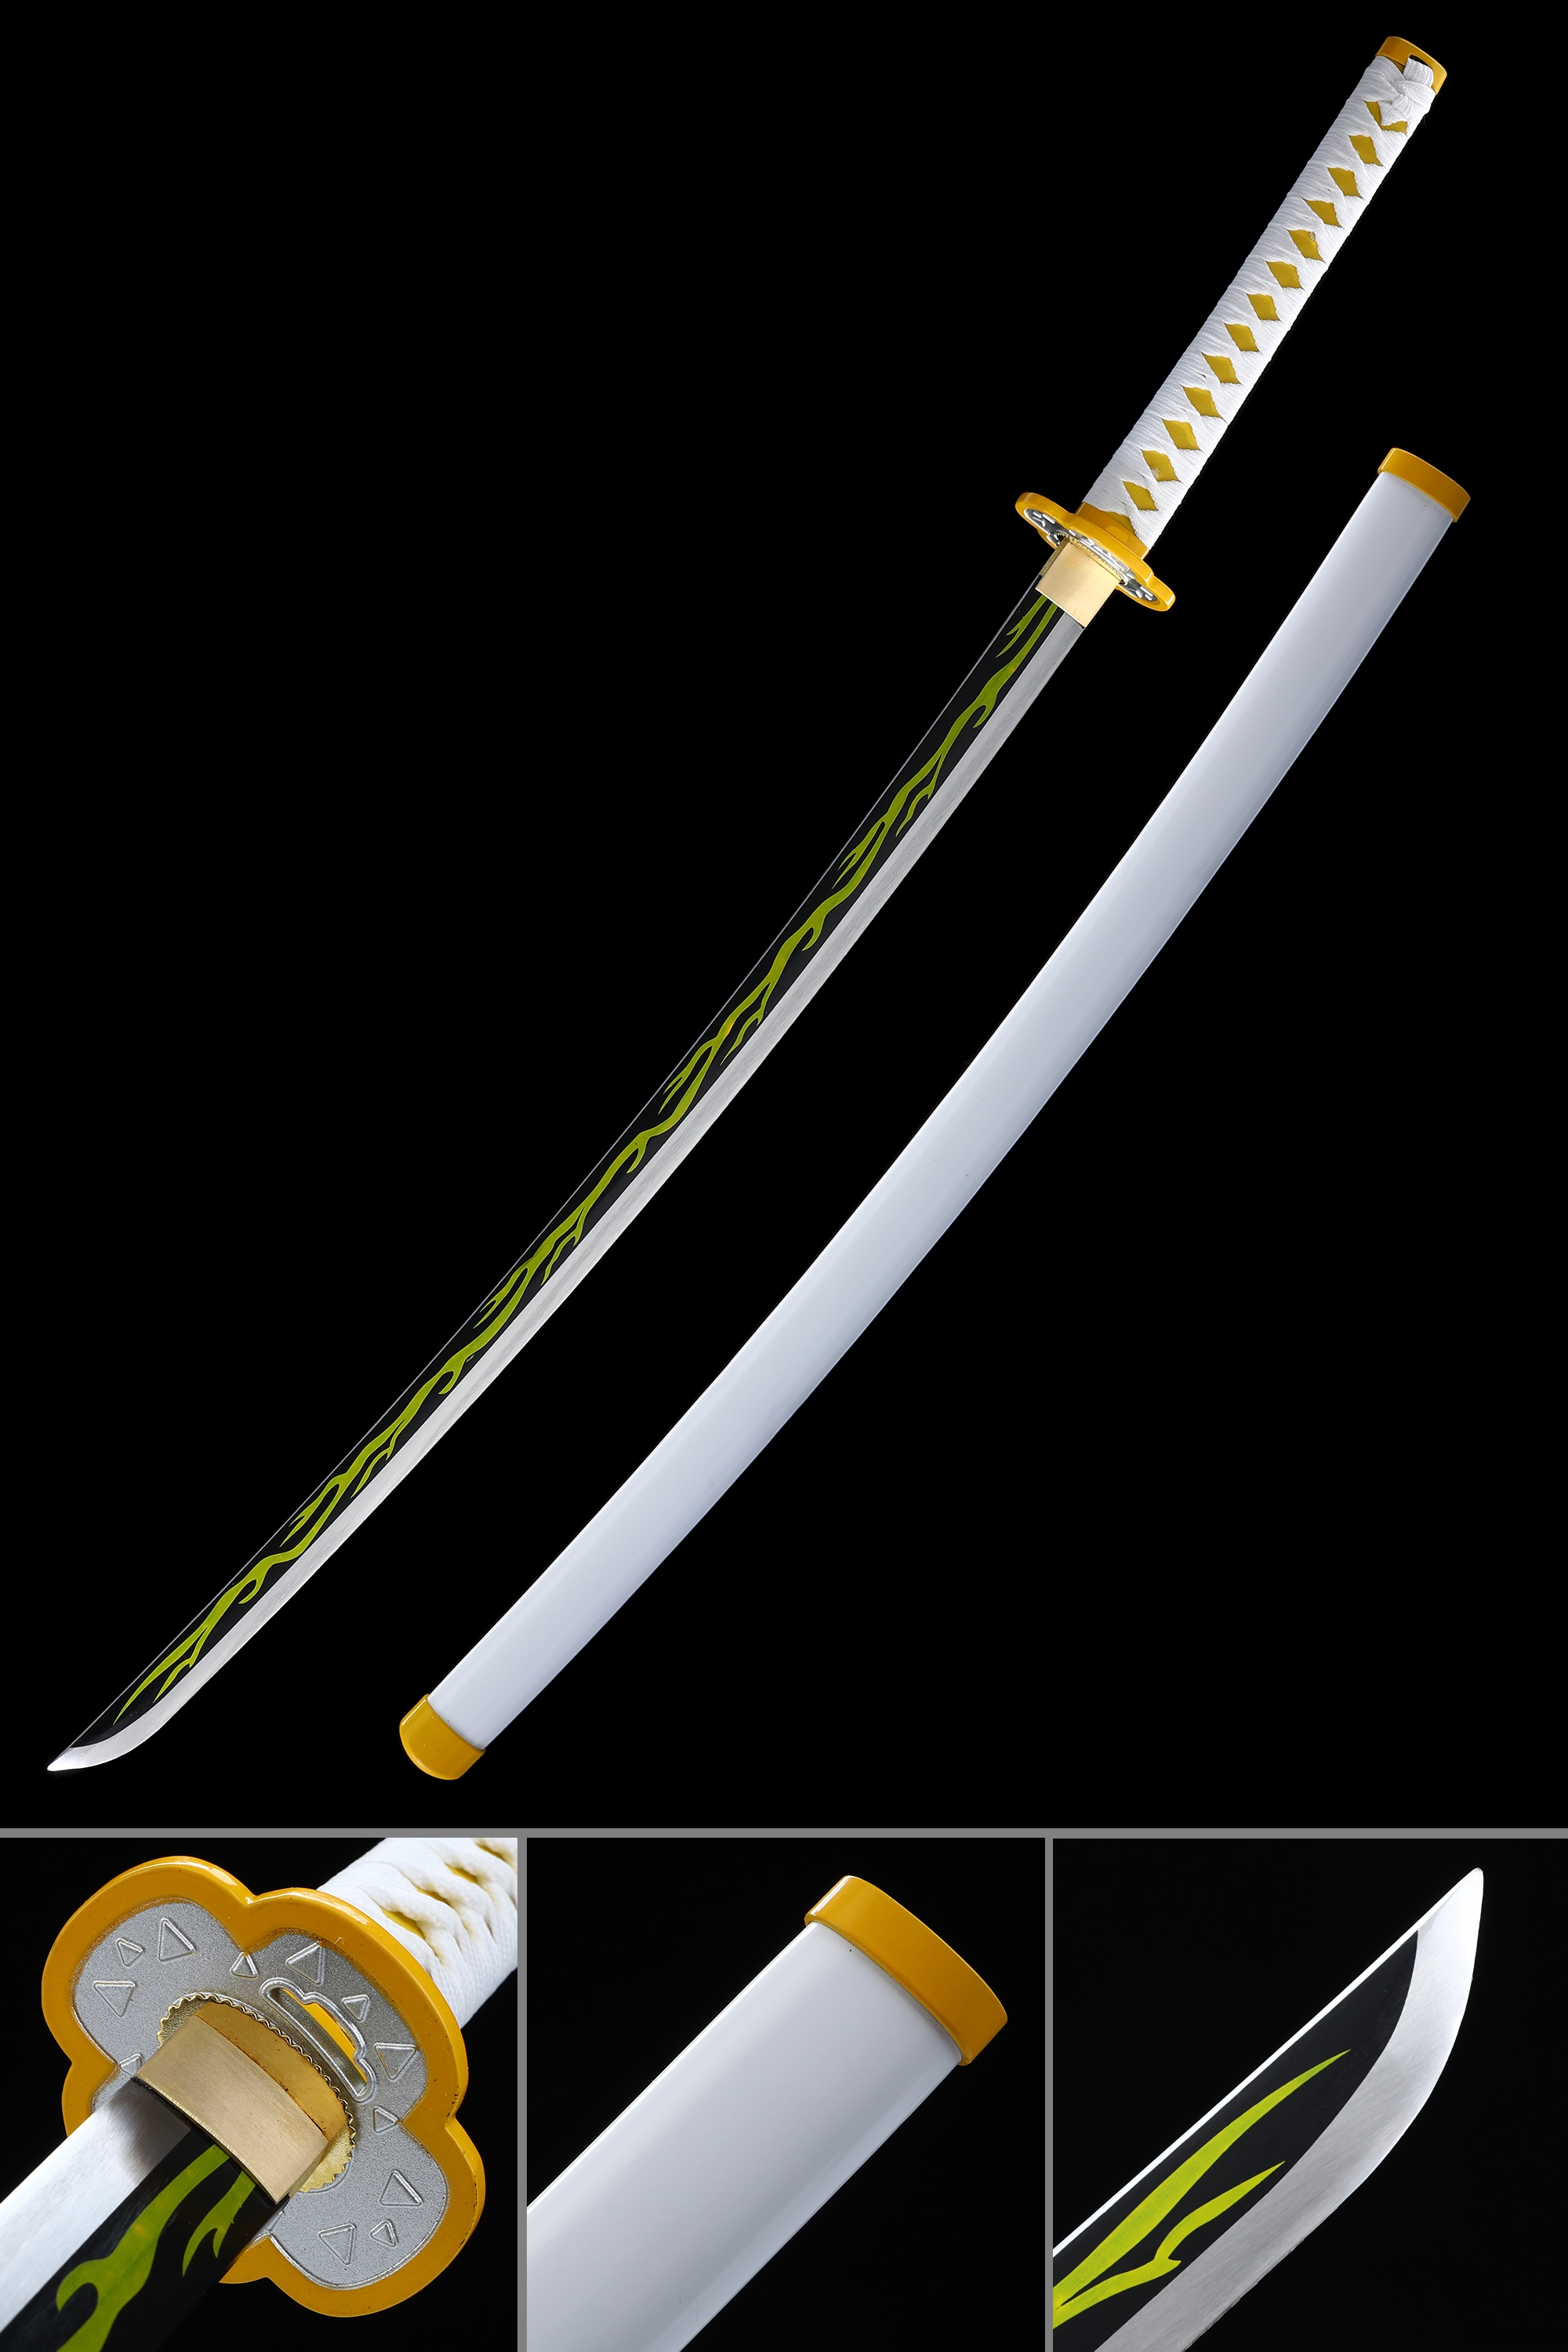 Demon slayer quiz】Who's sword is this?【kimetsu no yaiba】 